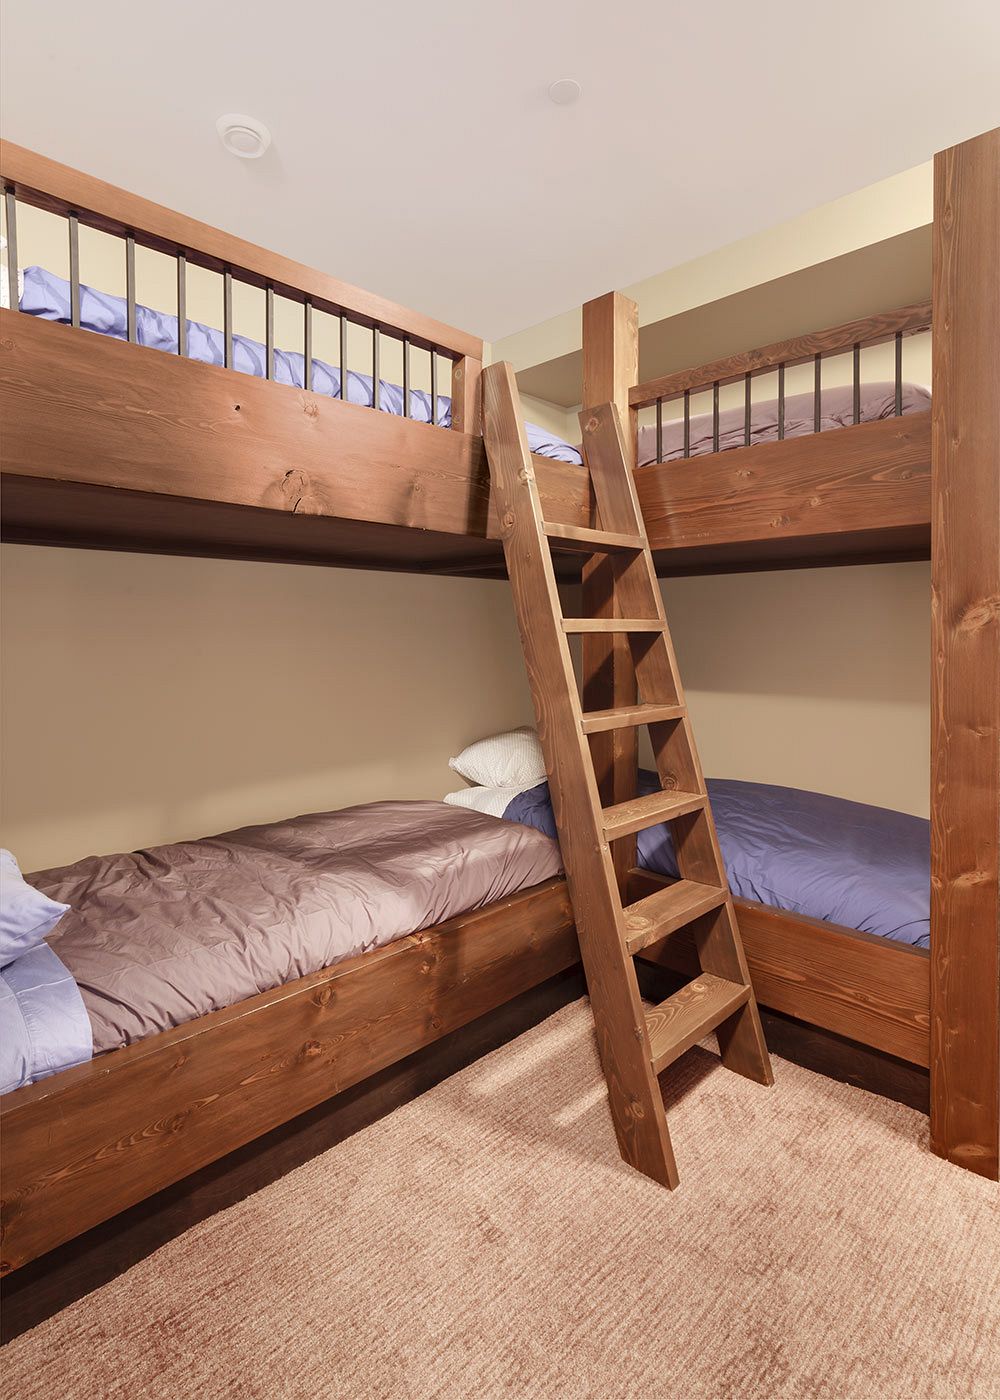 Custom bunks with smooth finish timbers.